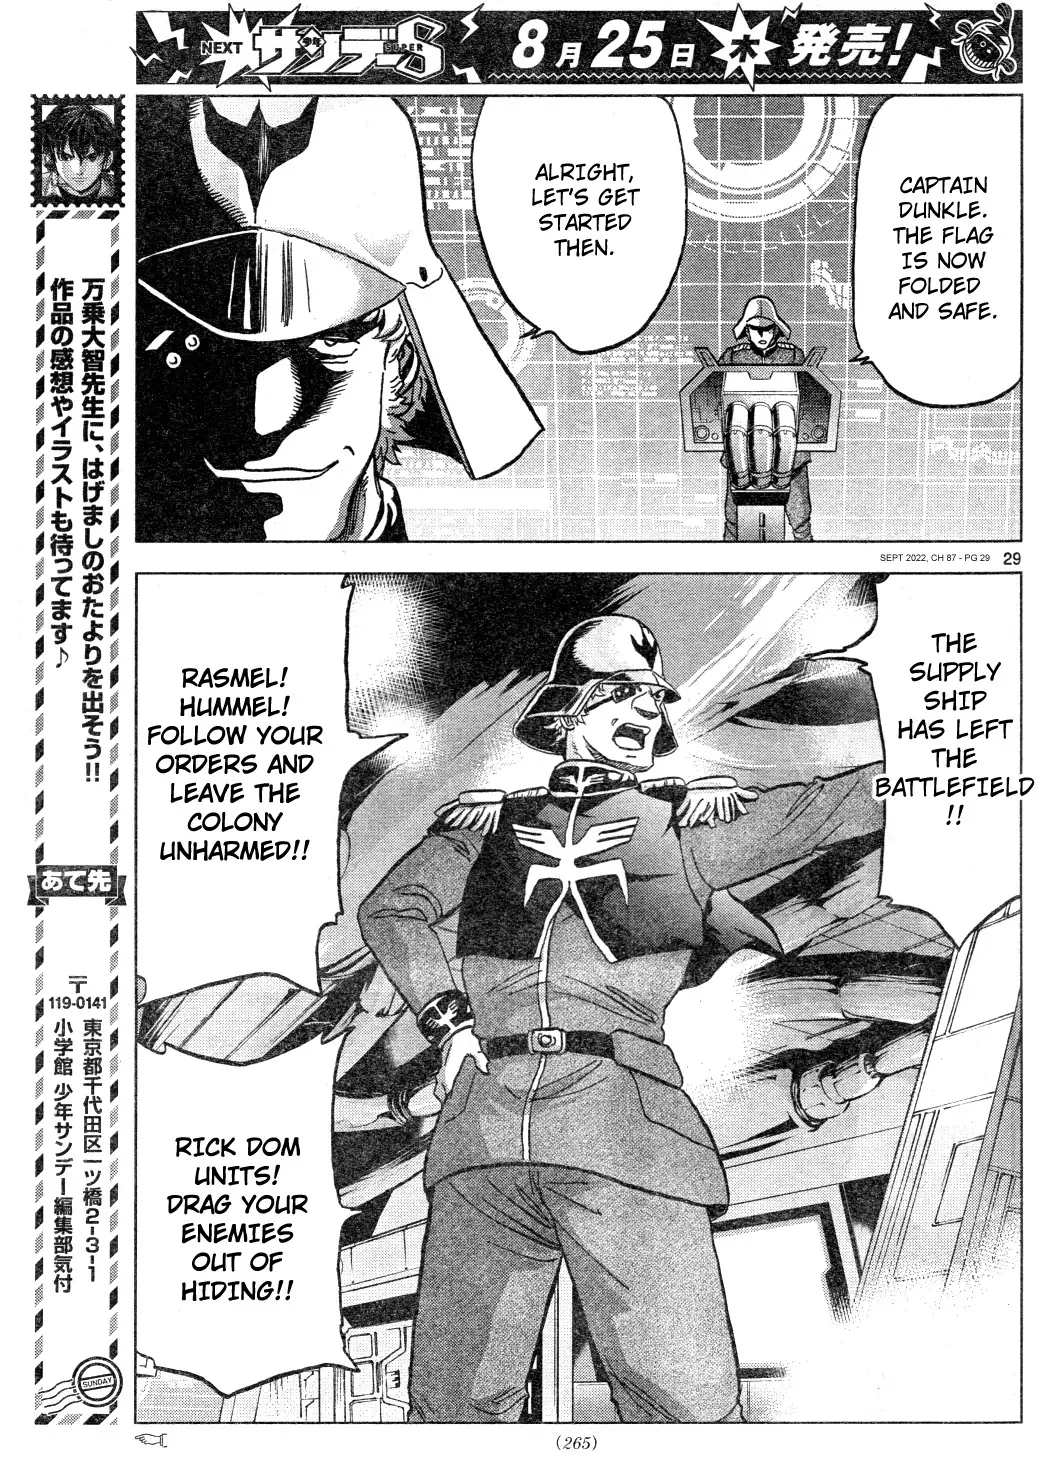 Mobile Suit Gundam Aggressor - 87 page 29-8e59b3e9